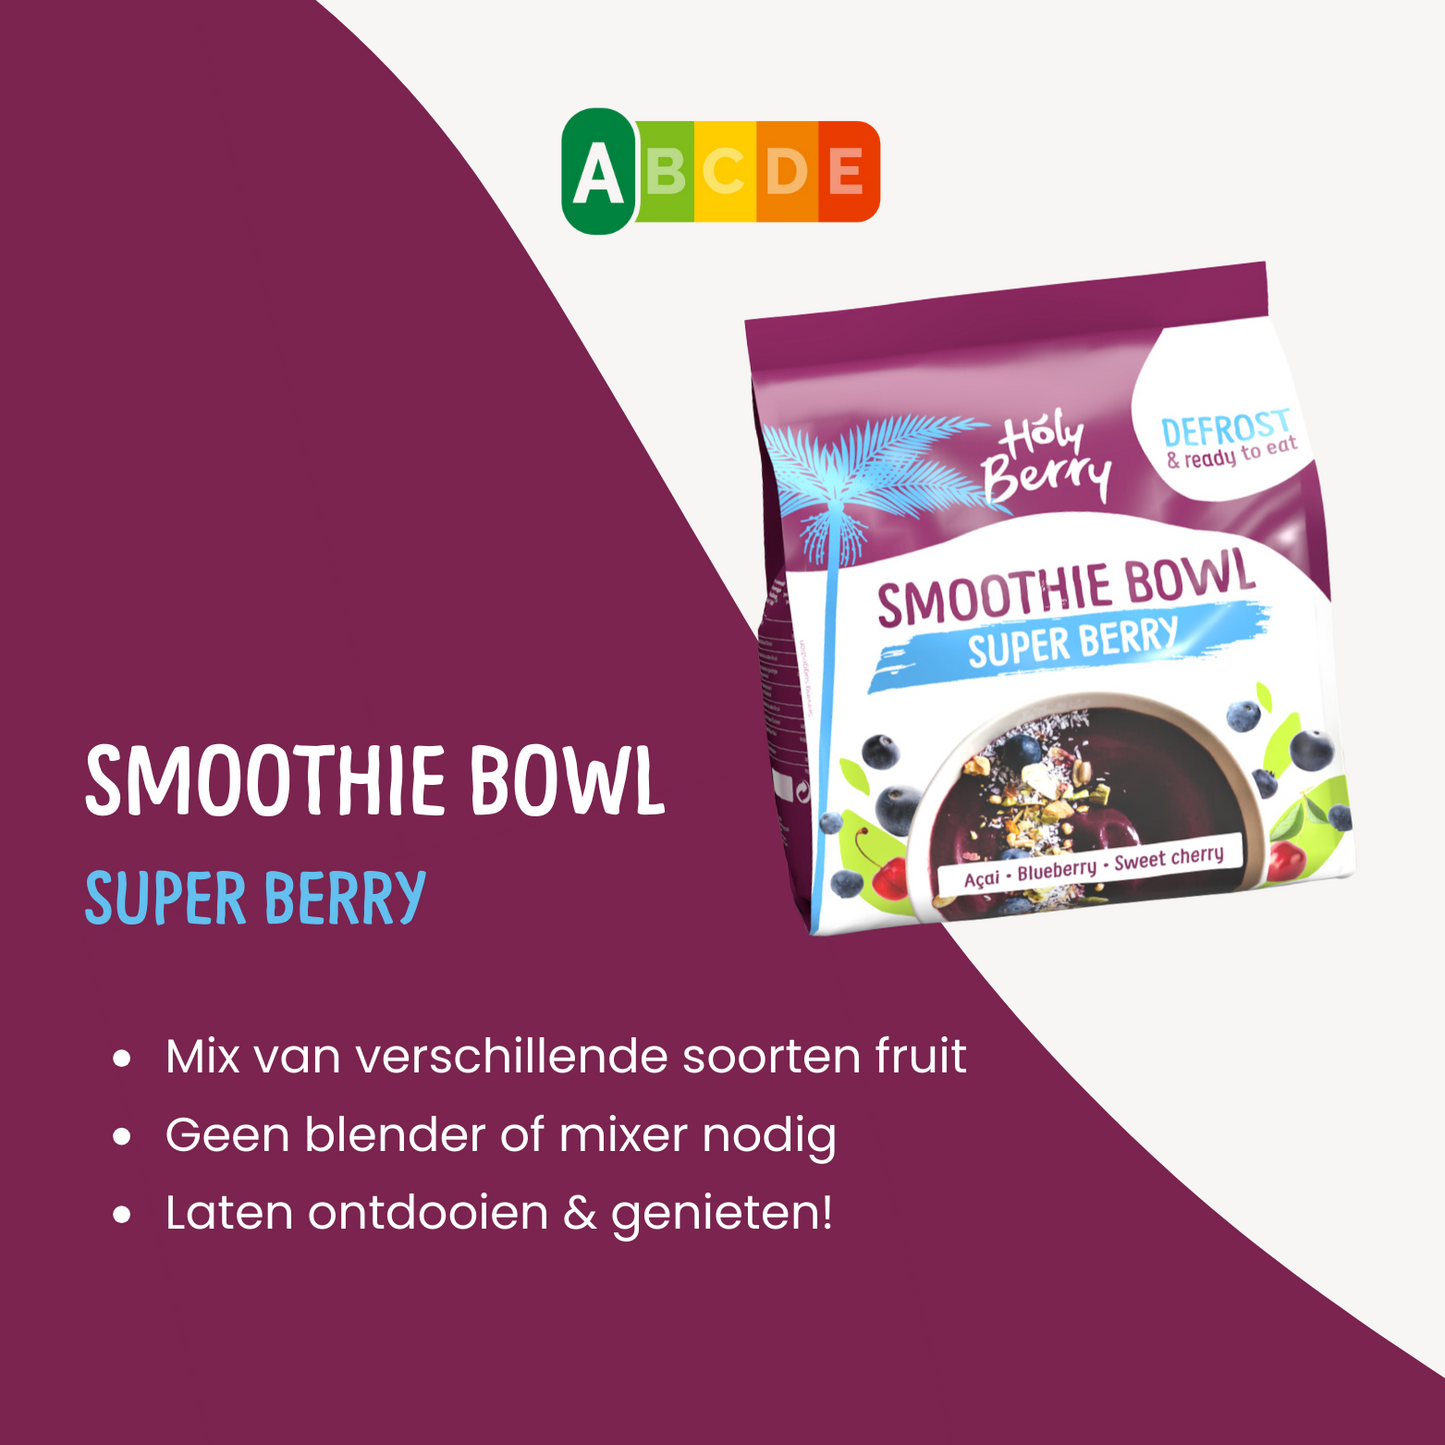 Voordelen Smoothie Bowl Super Berry